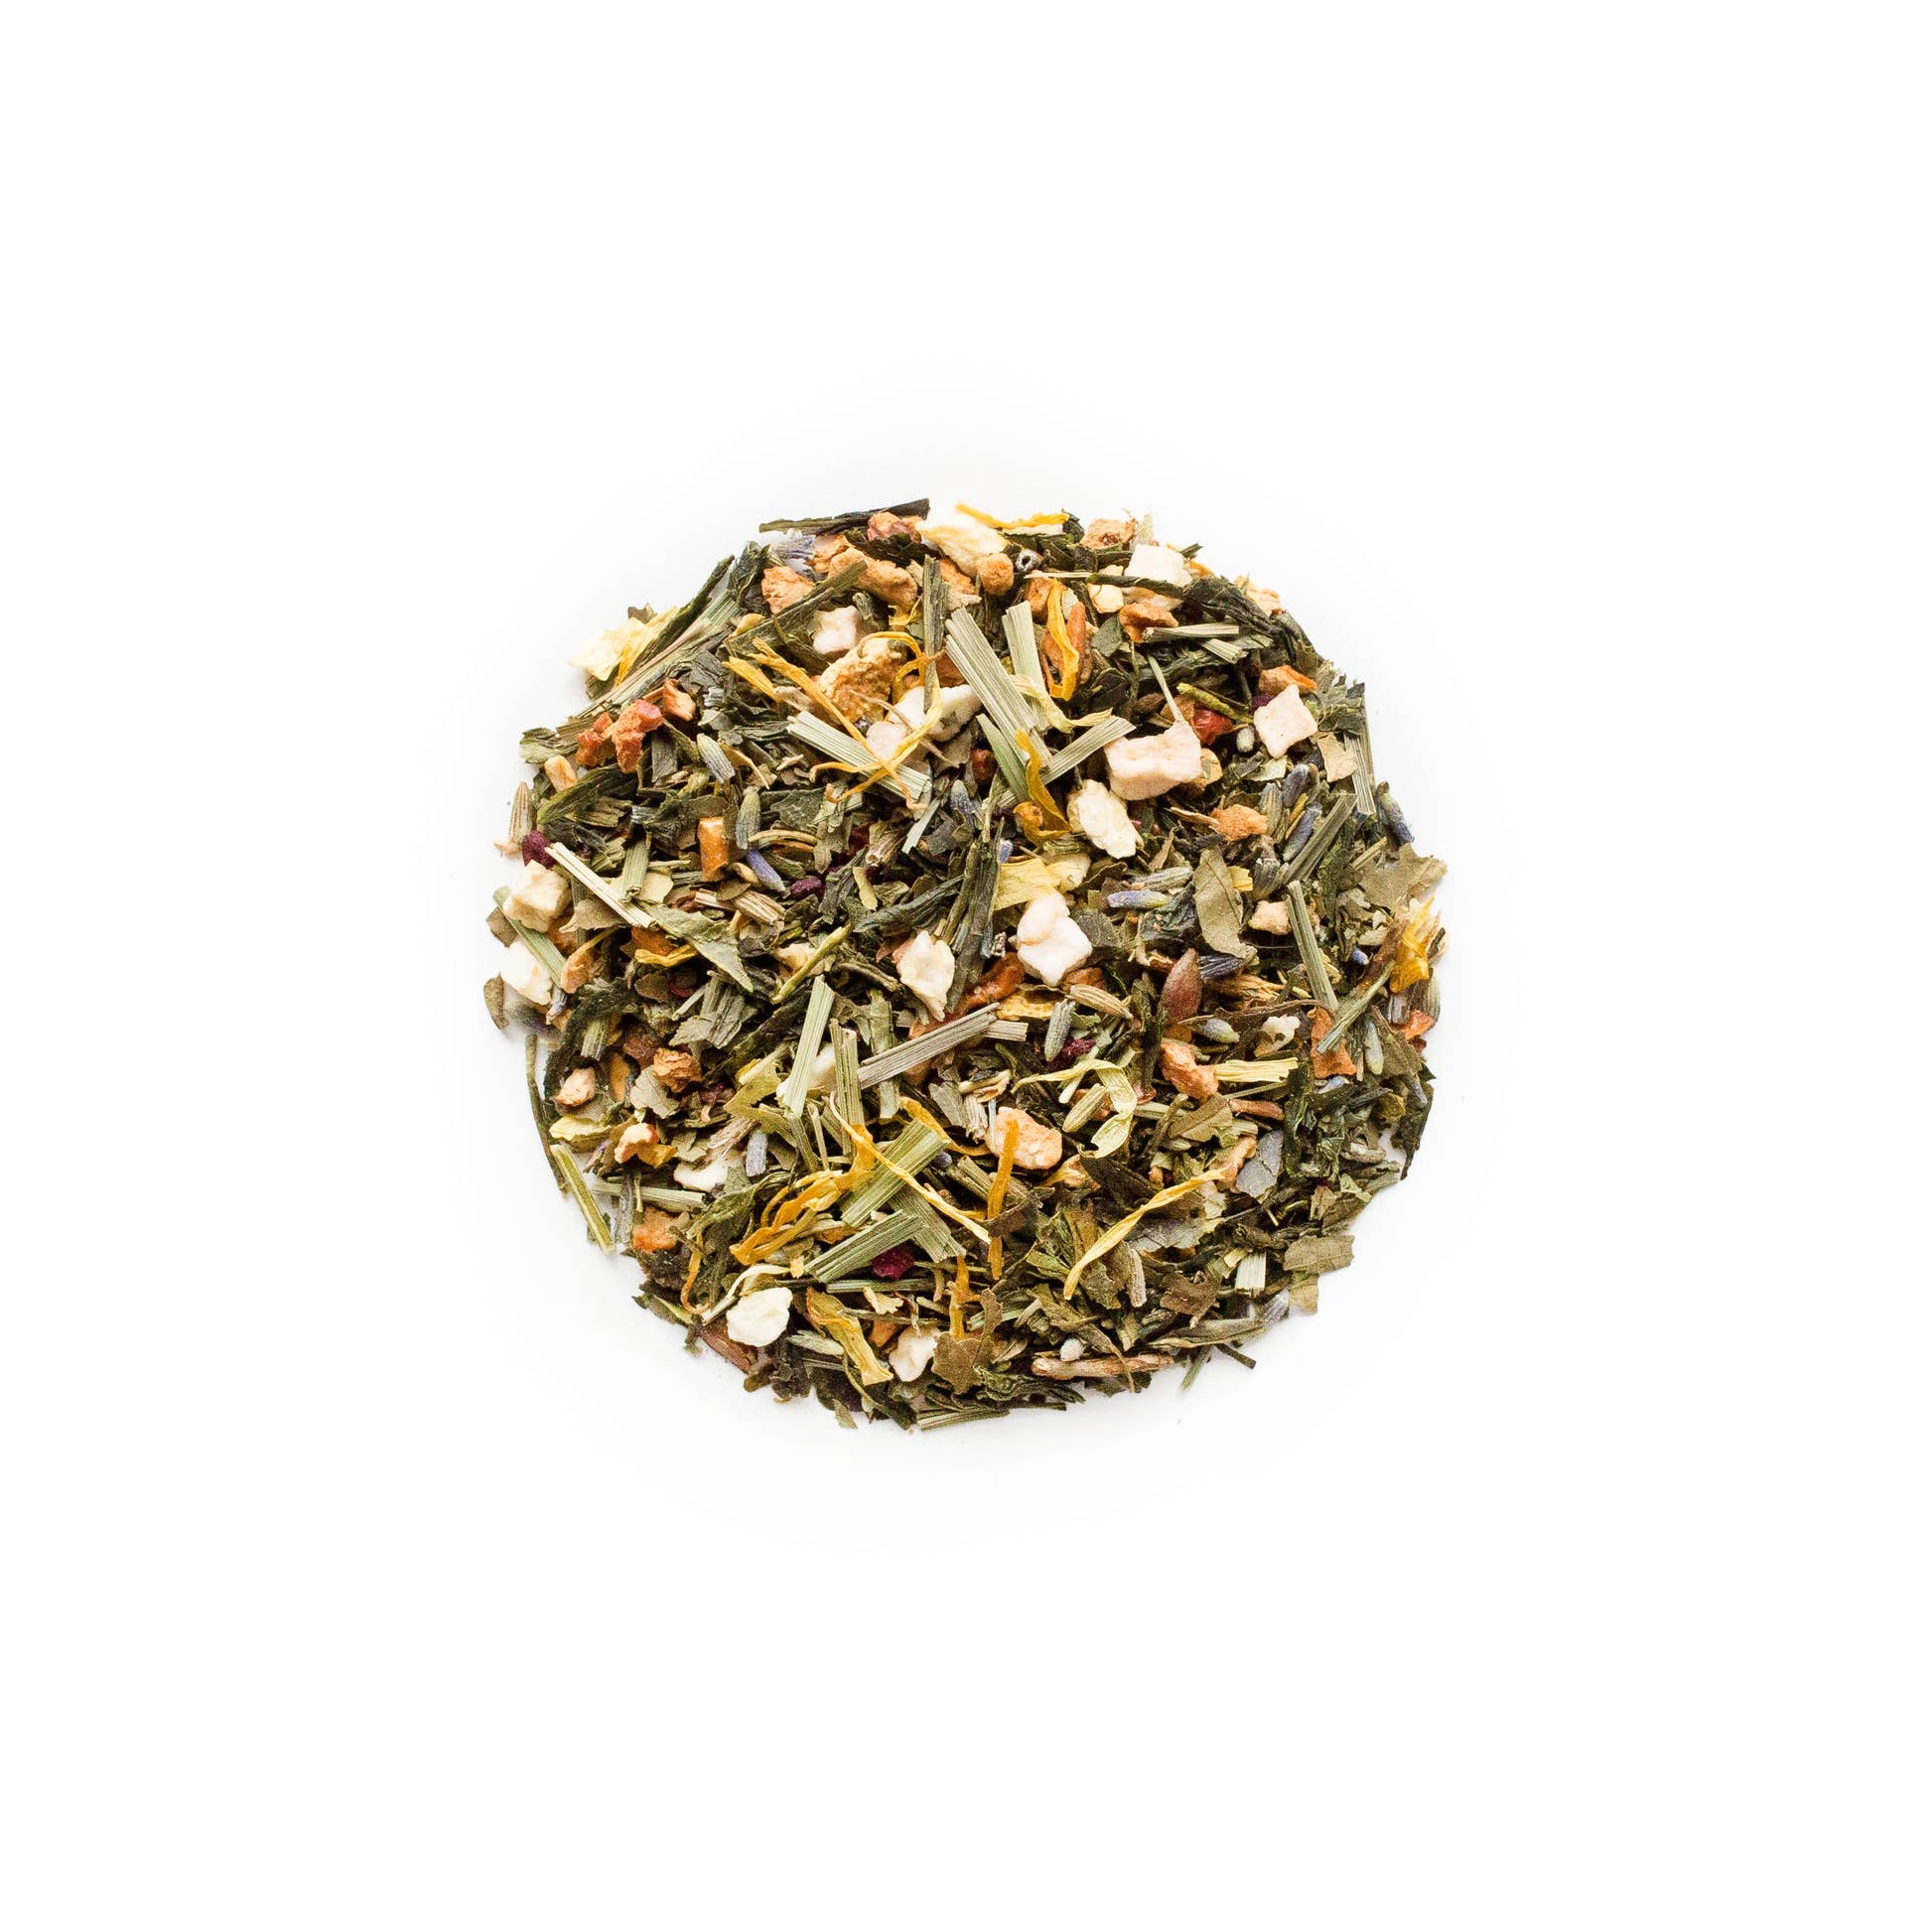 Circle of loose leaf Amalfi Lavender Limoncello tea on white background